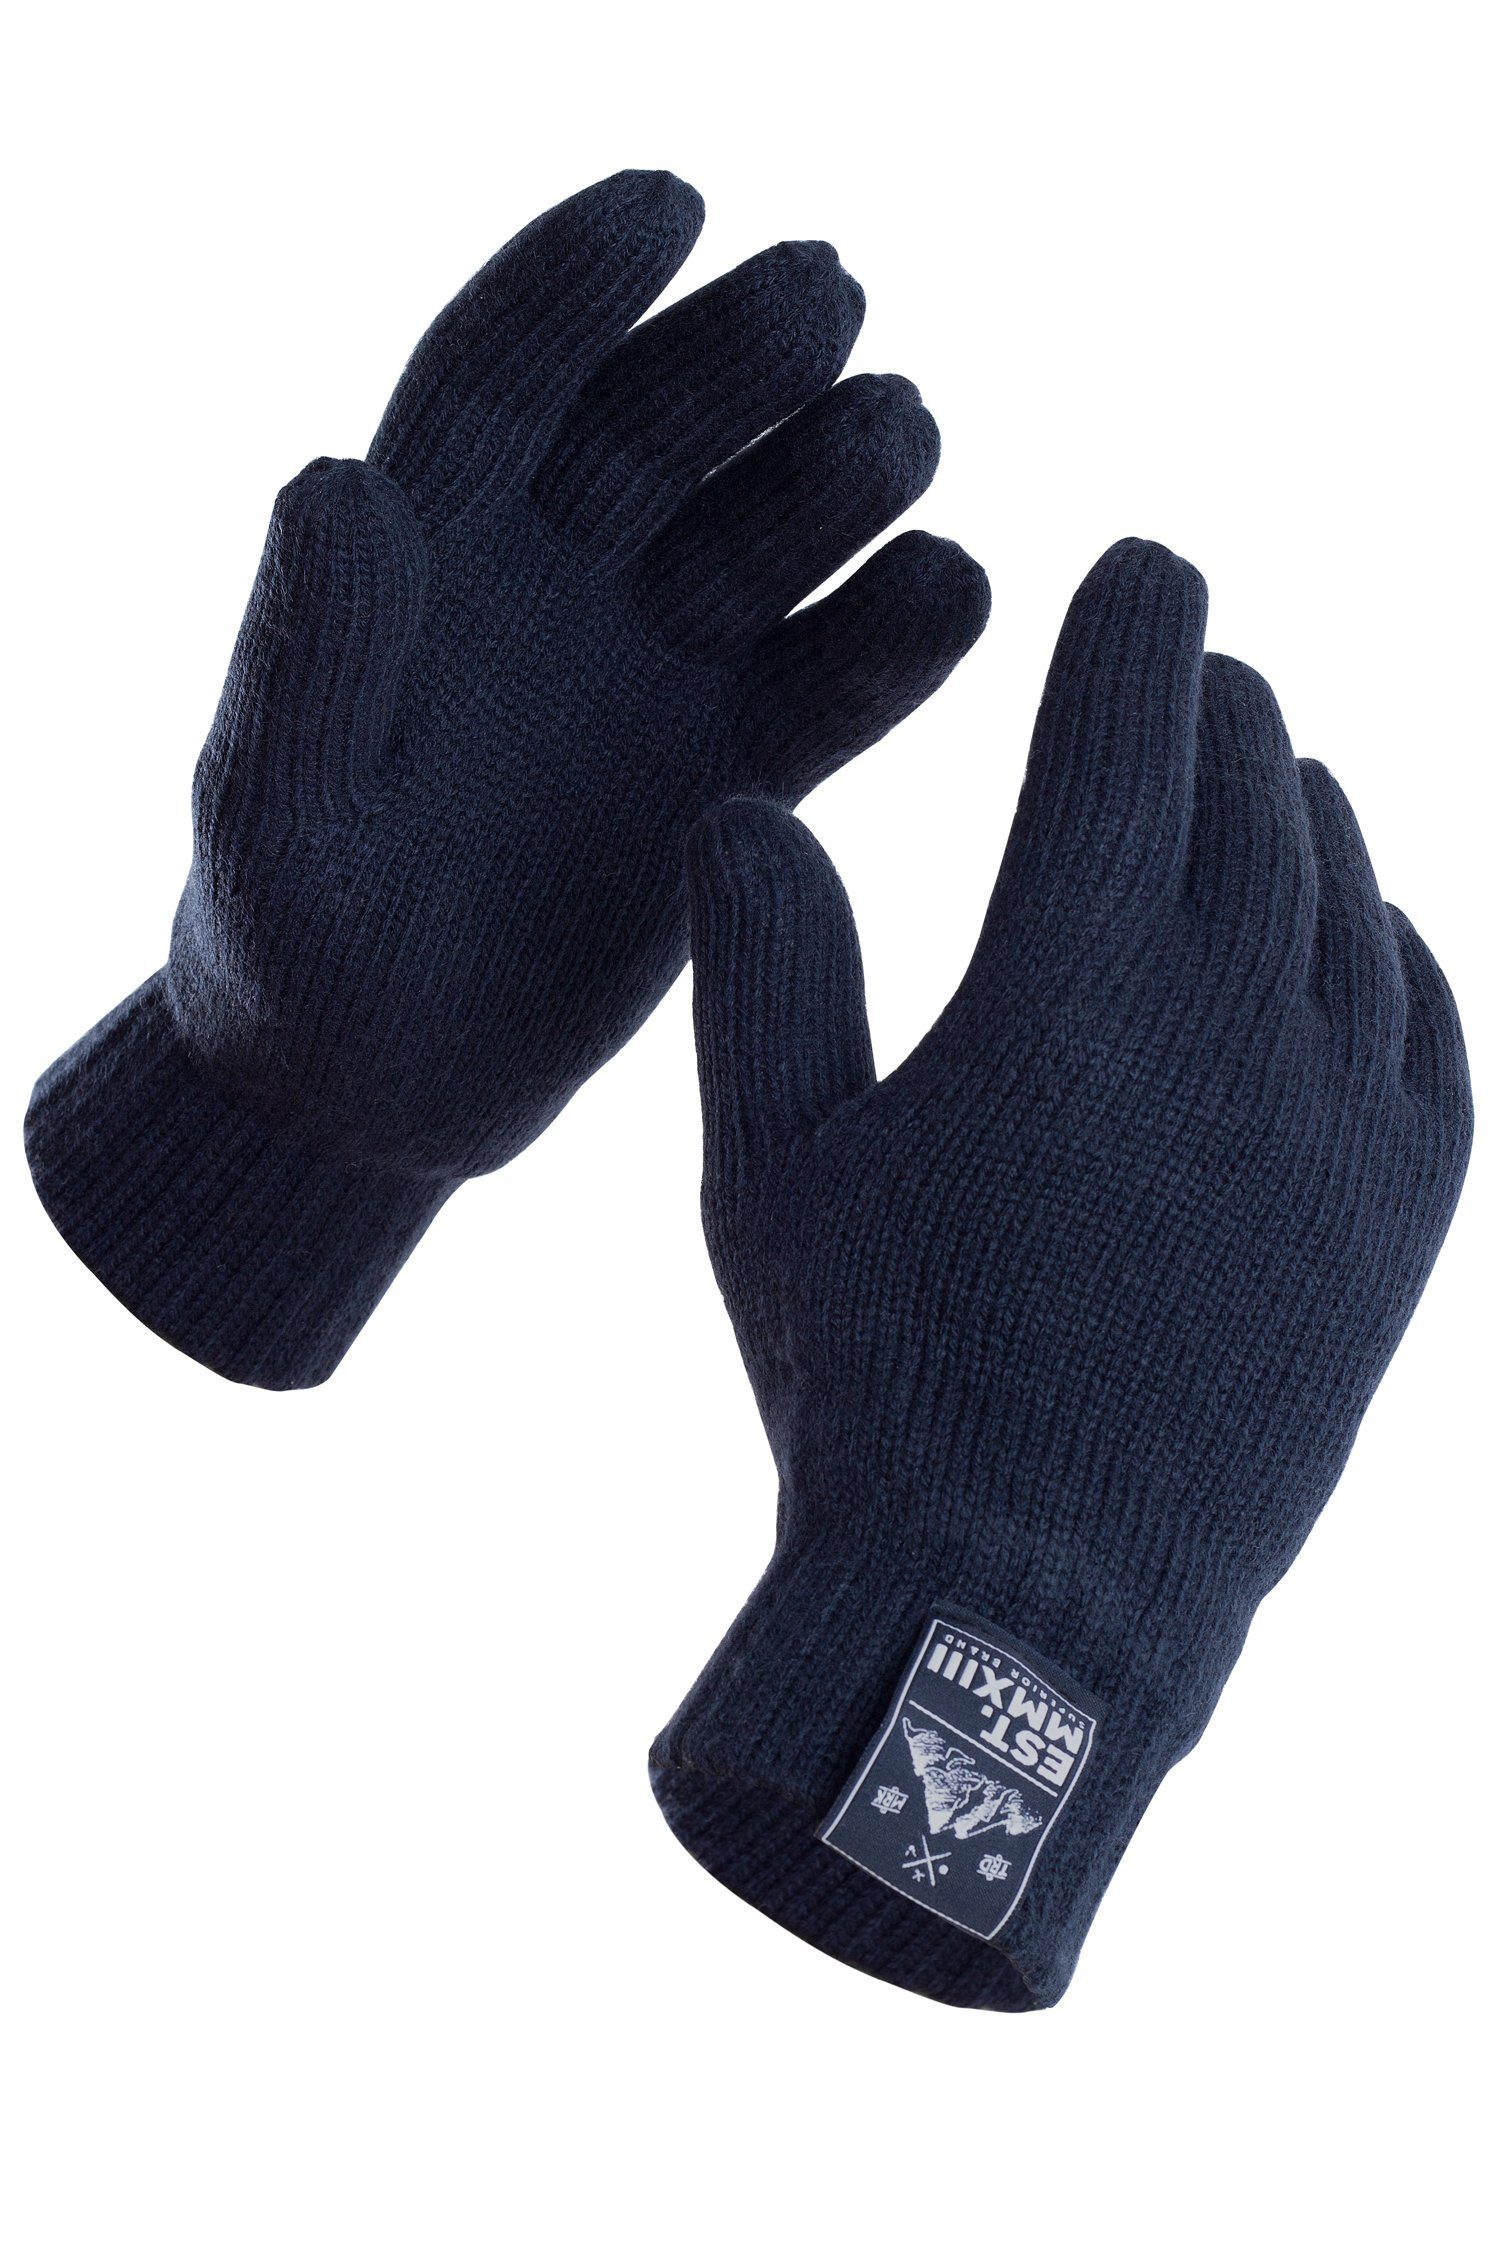 Manufaktur13 Baumwollhandschuhe Rough Gloves - Handschuhe/ Vollfingerhanschuhe Navy